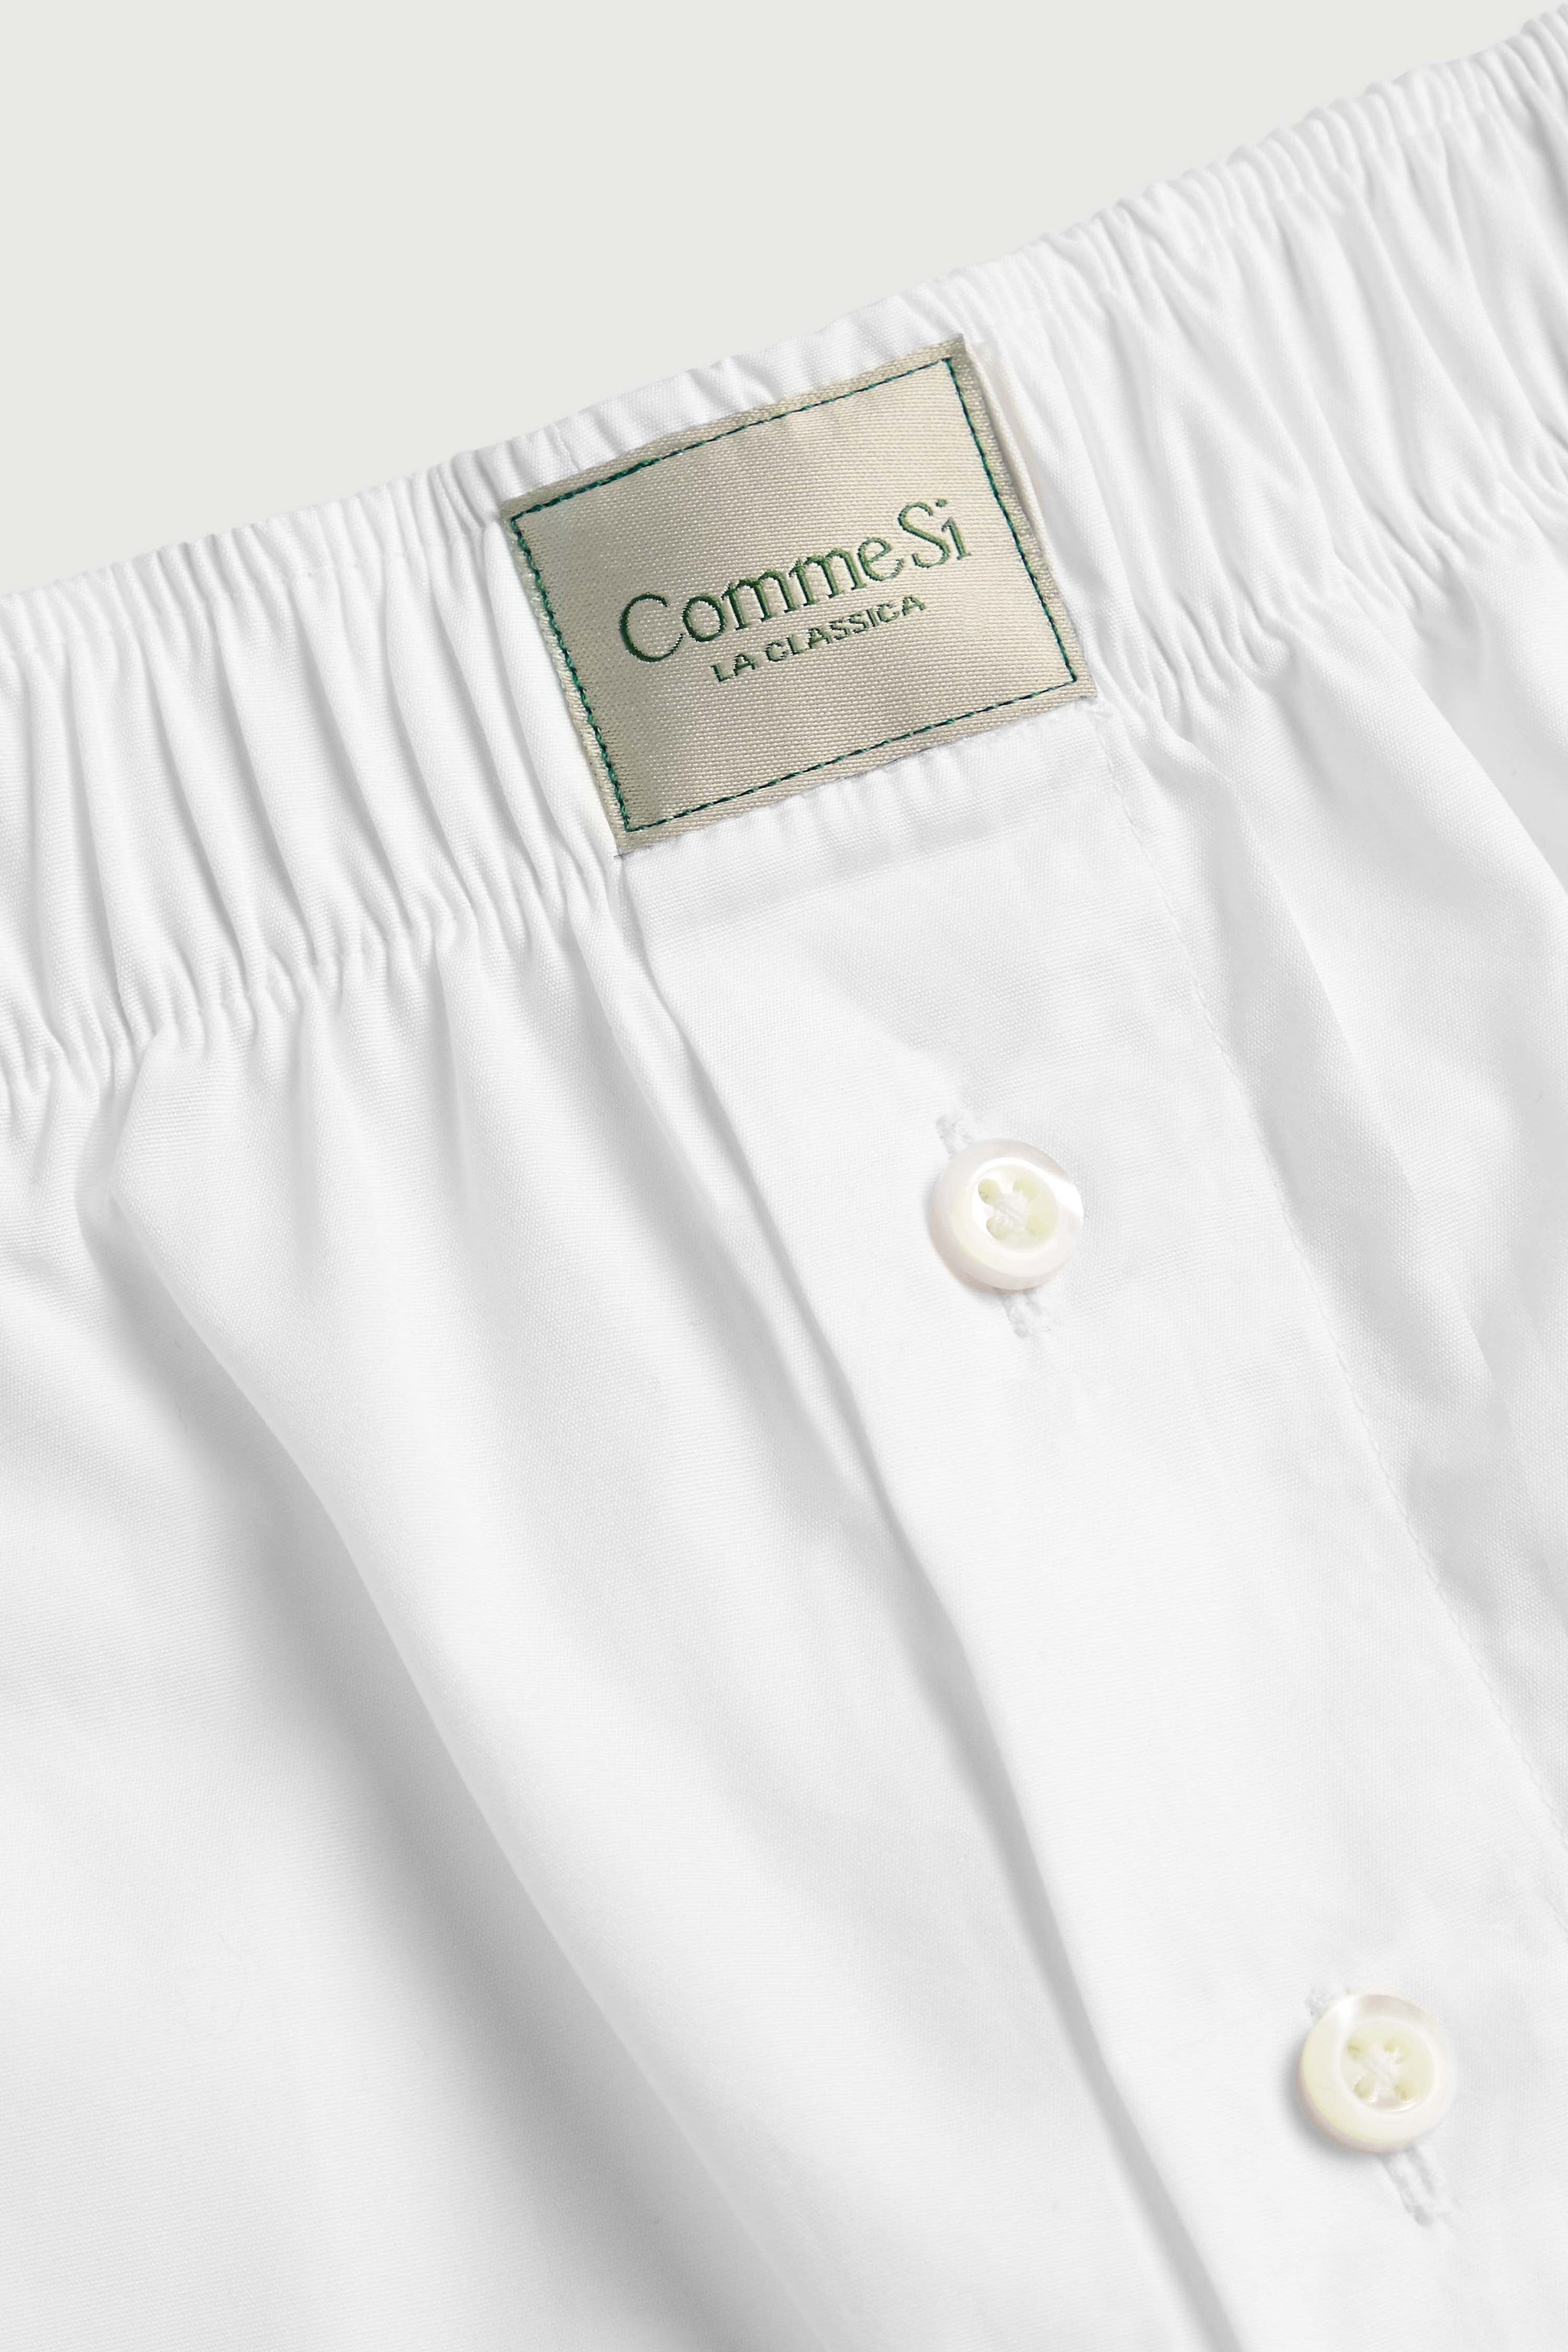 Front waist detail, La Boxer Classica, White, Italian Cotton Poplin, Comme Si